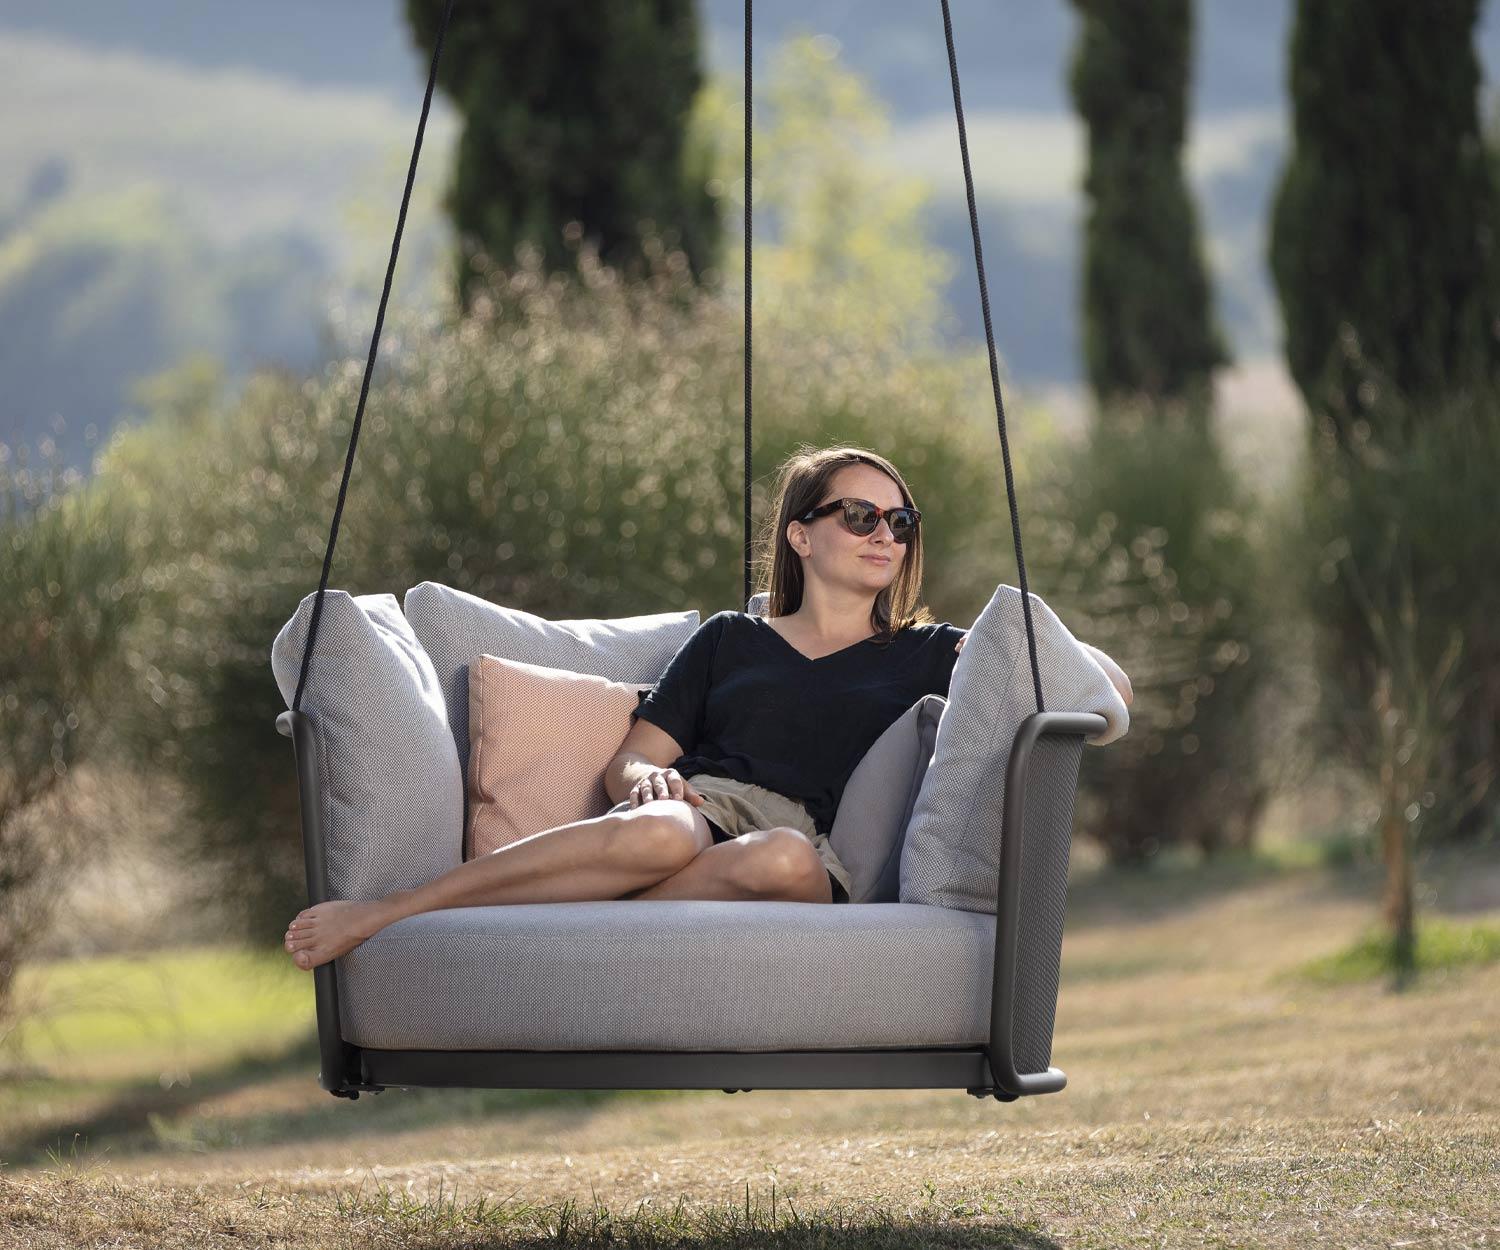 Exclusive Todus Baza Round Swing Outdoor Garden Balcony Hanging Chair